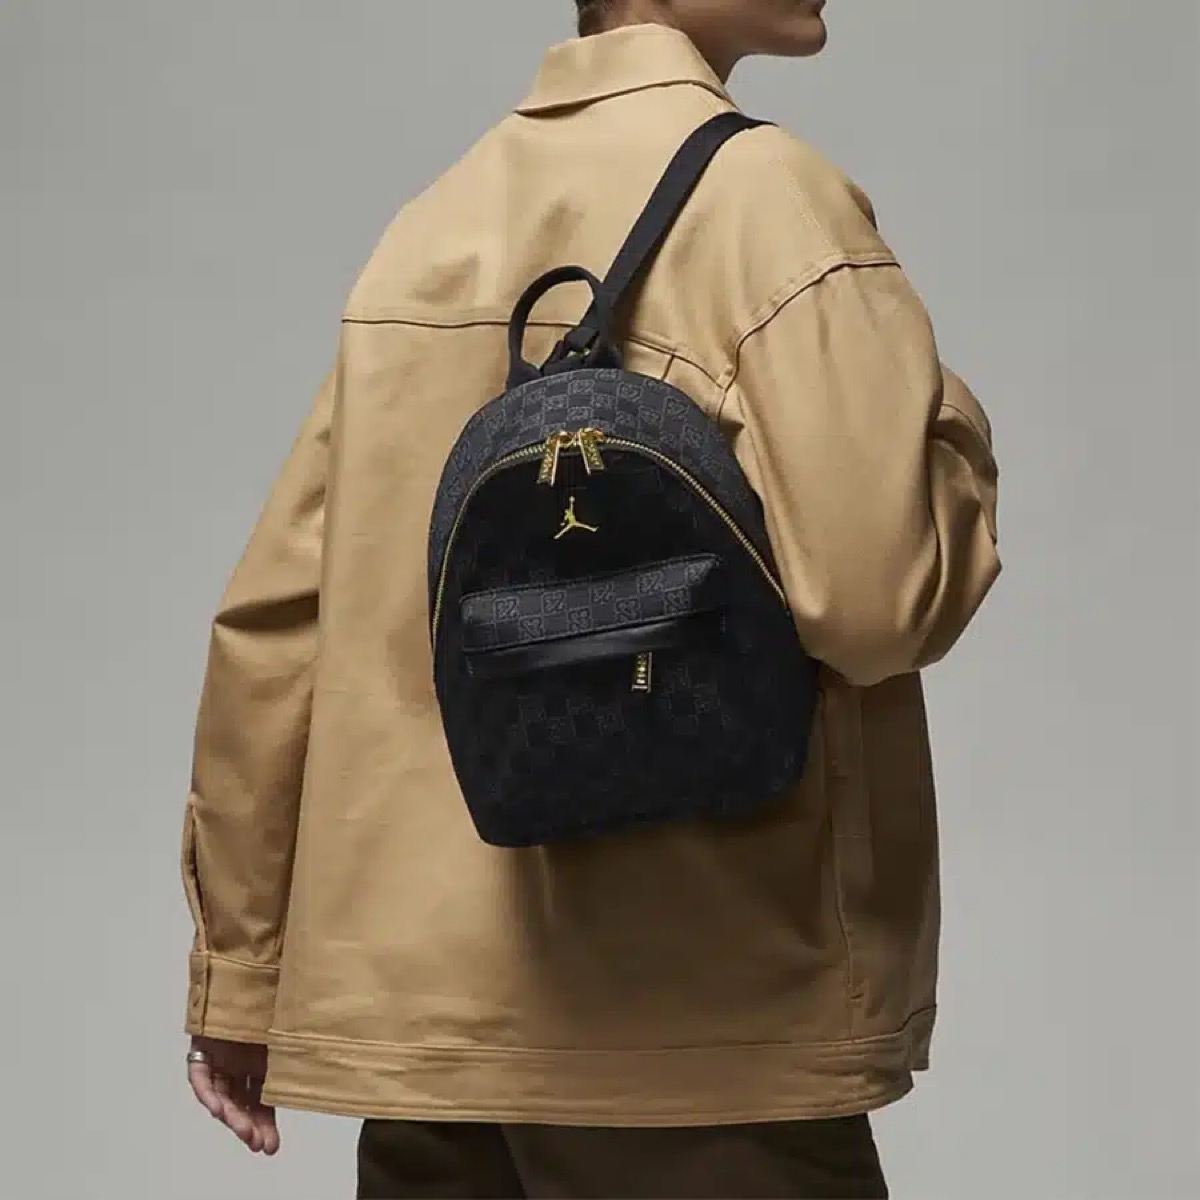 Jordan Brand 『Monogram Bag Collection』が国内10月13日より発売